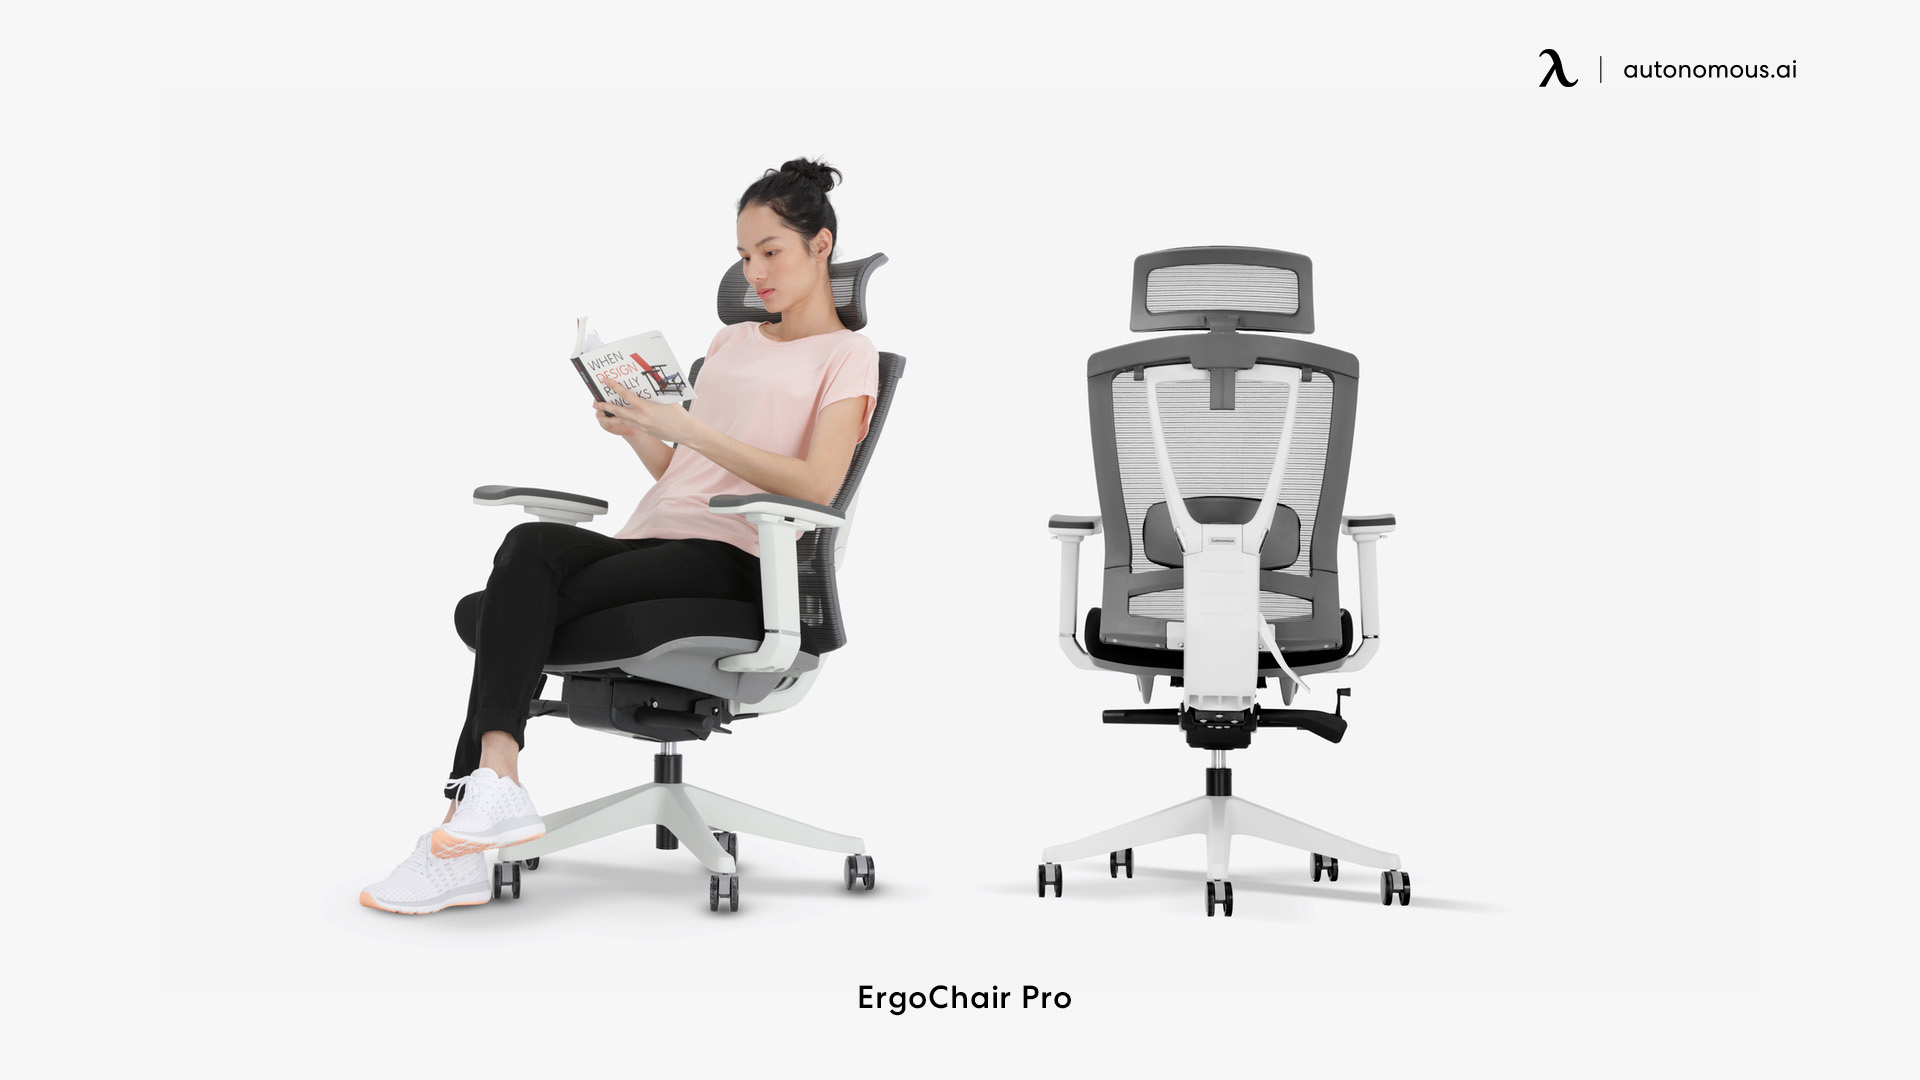 ErgoChair Pro white ergonomic task chair